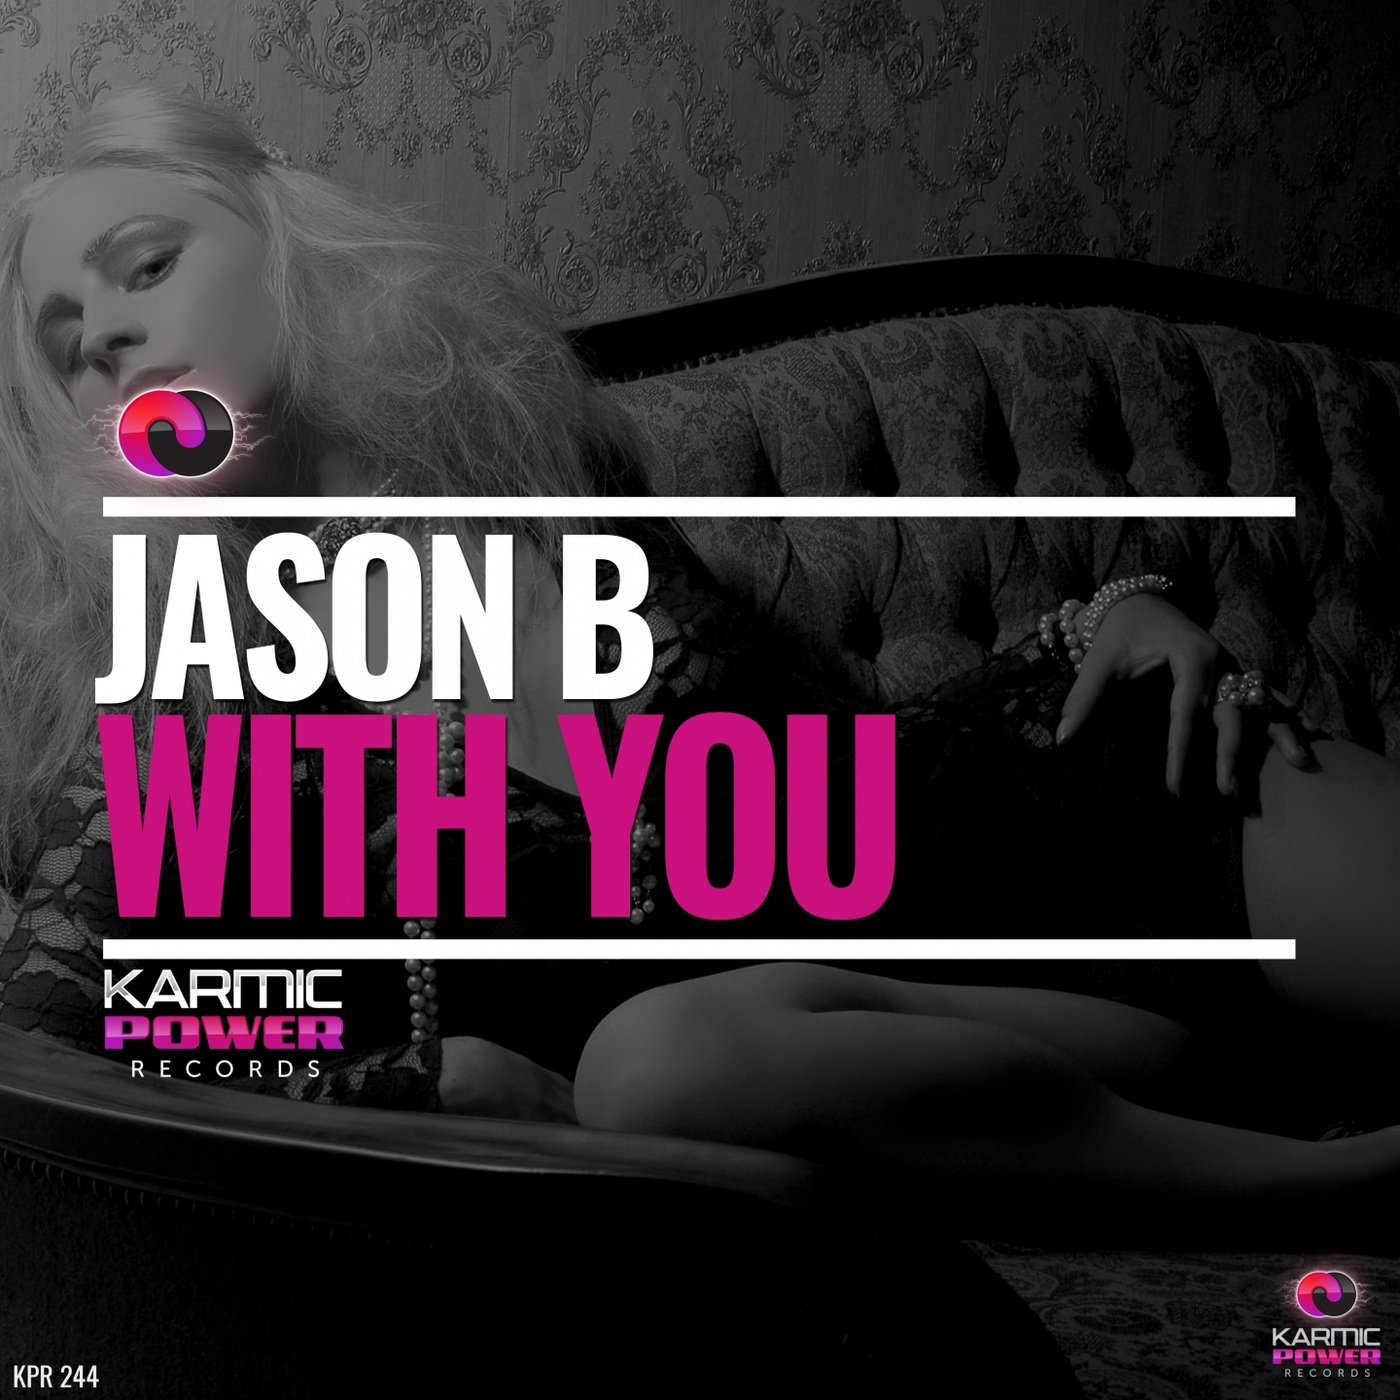 Jason B - With You / Karmic Power Records